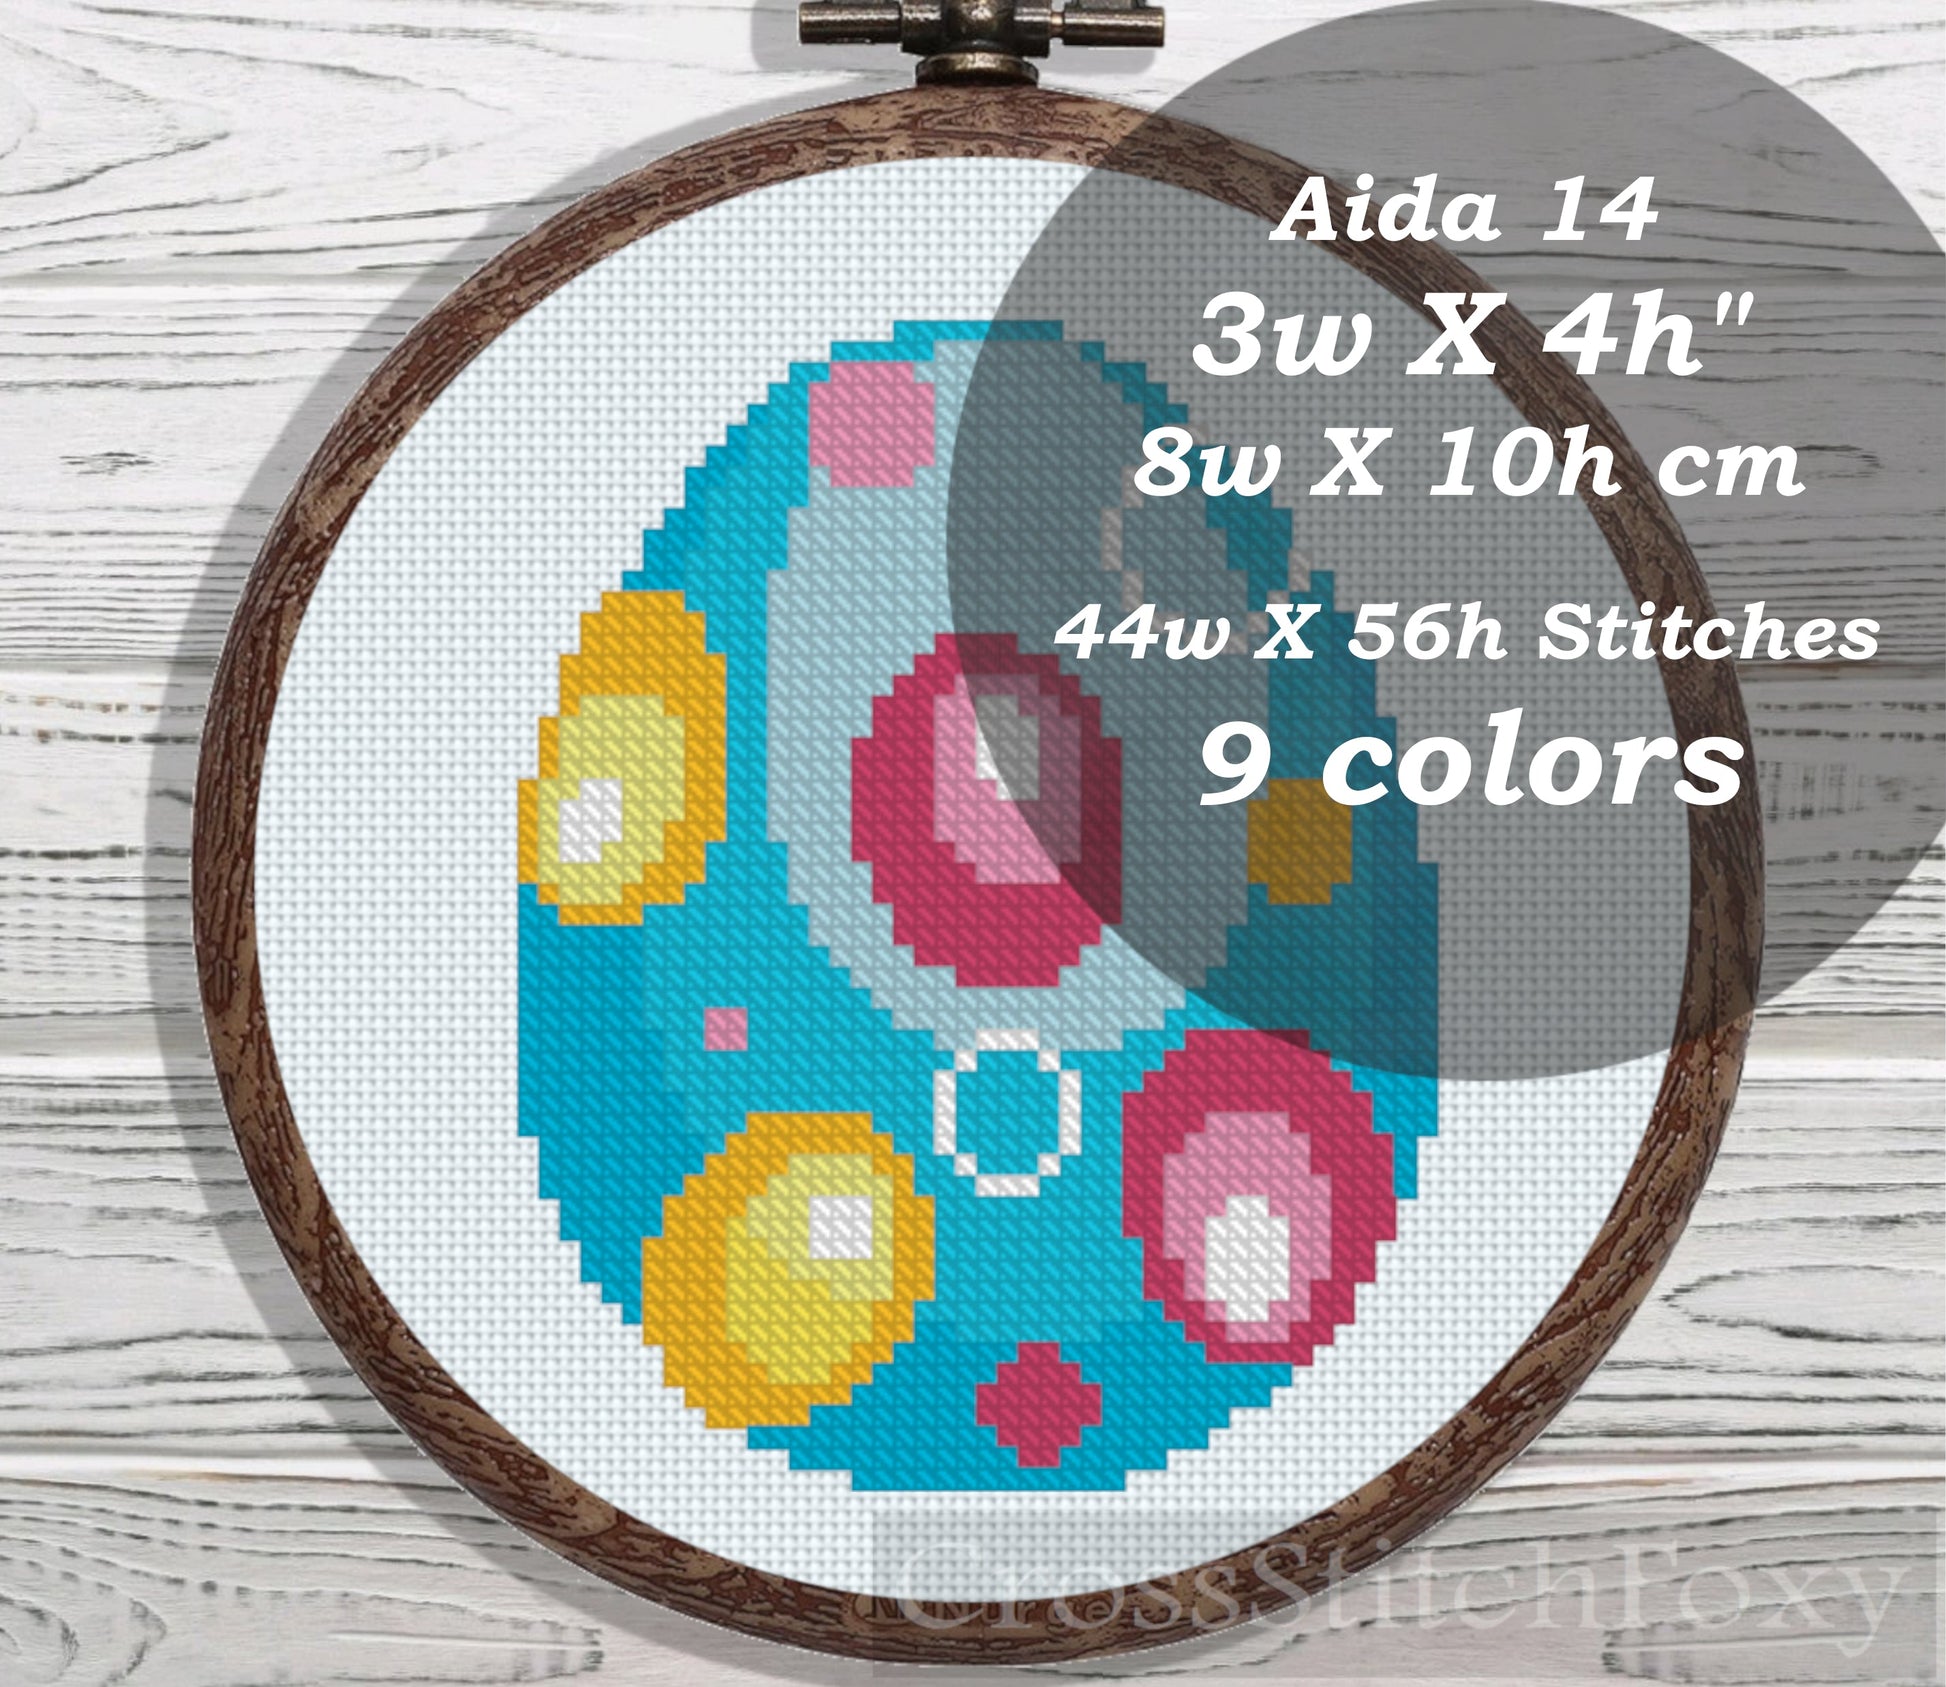 Blue Easter Egg cross stitch pattern